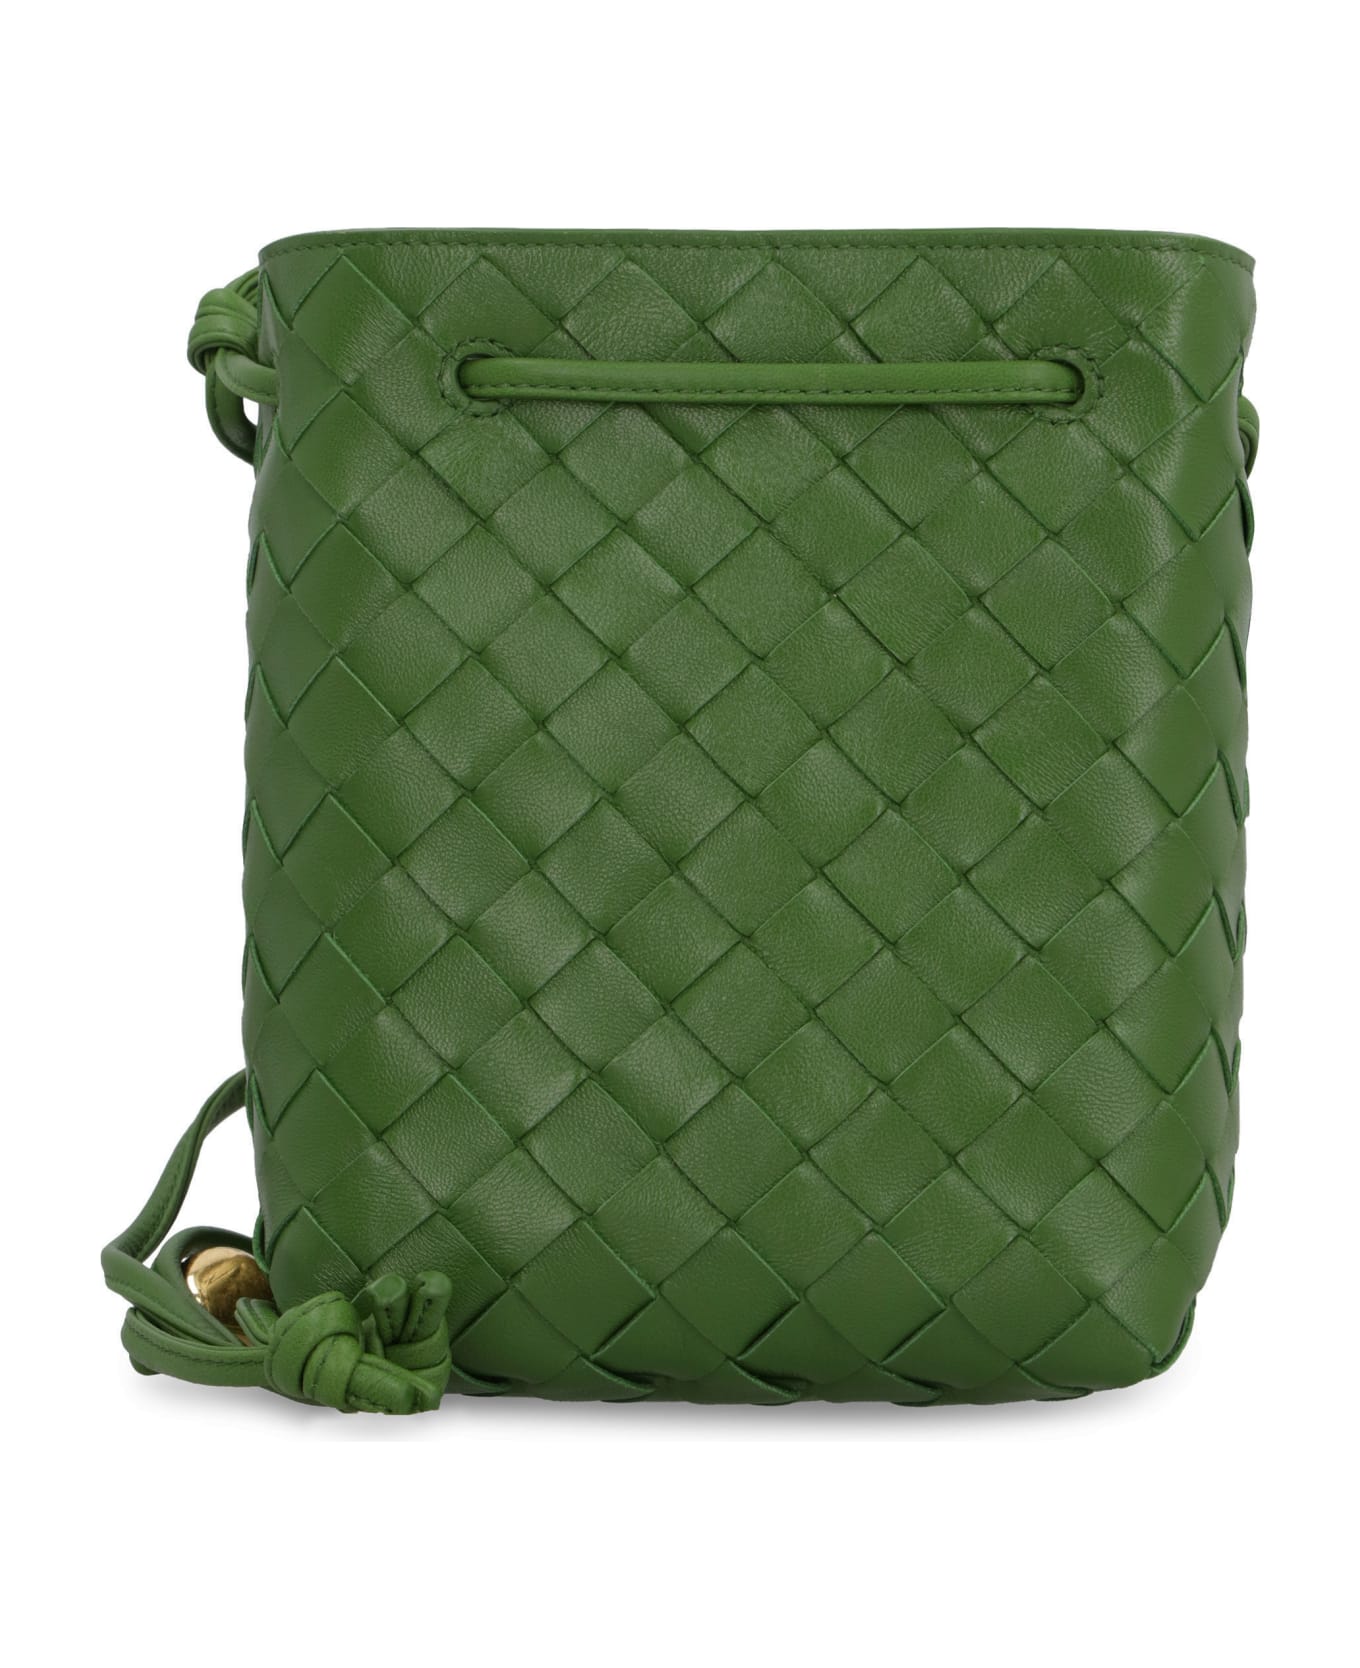 Bottega Veneta Leather Bucket Bag - green